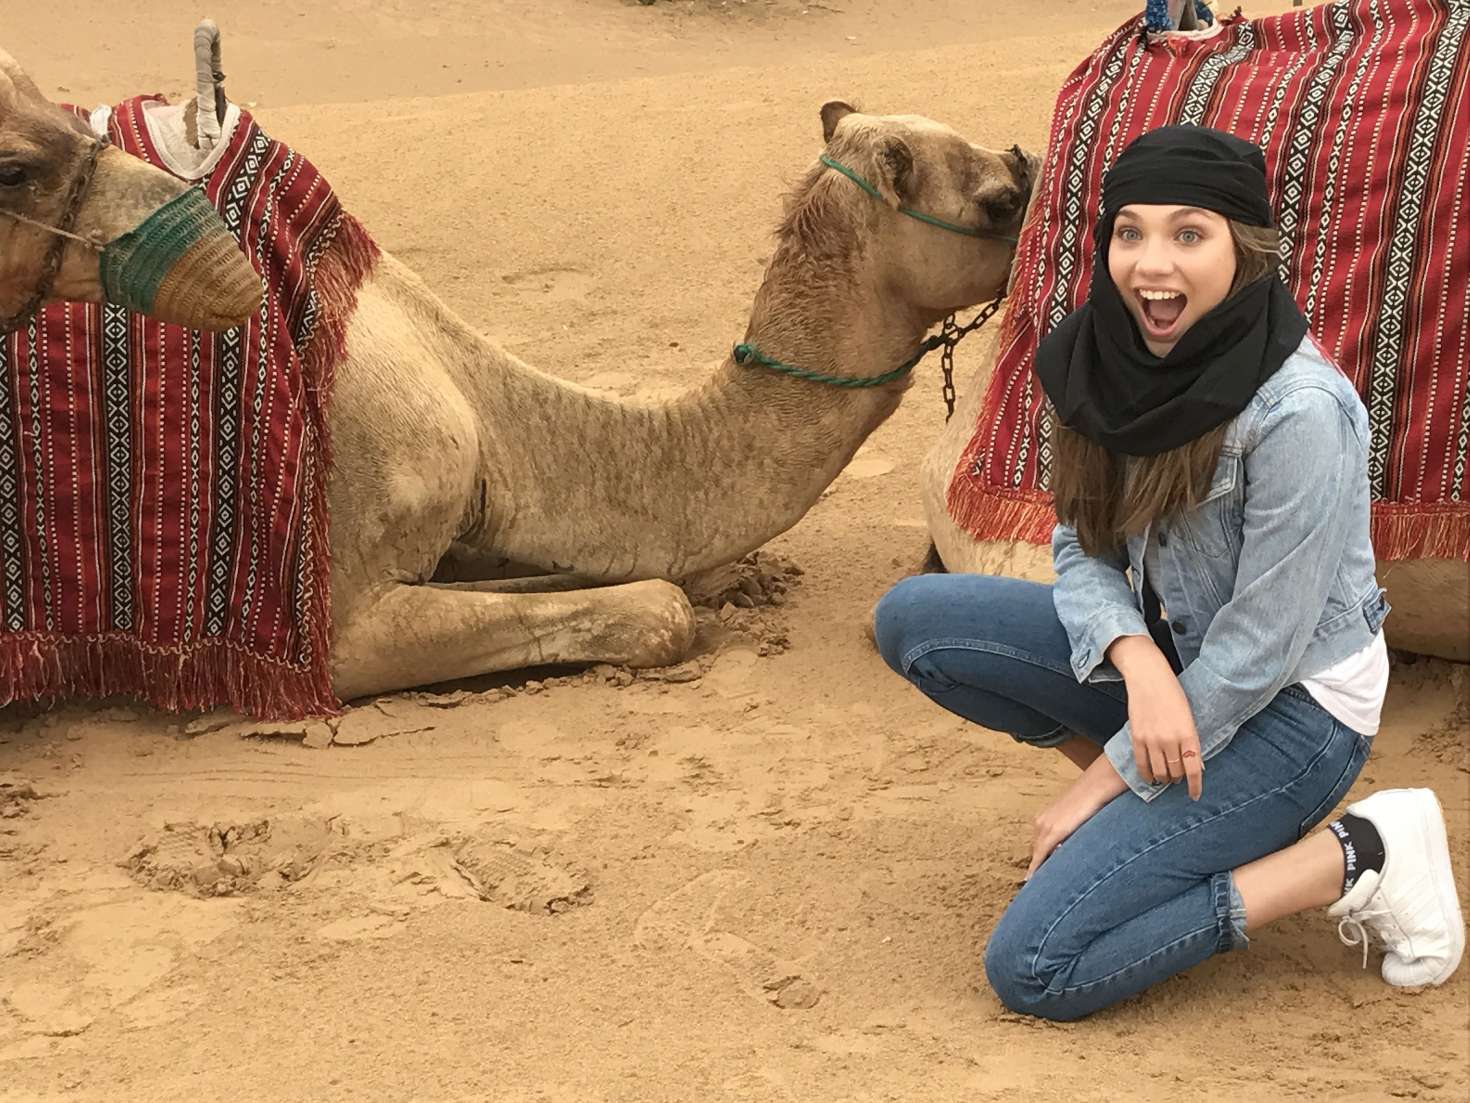 Maddie Ziegler riding a camel in Dubai